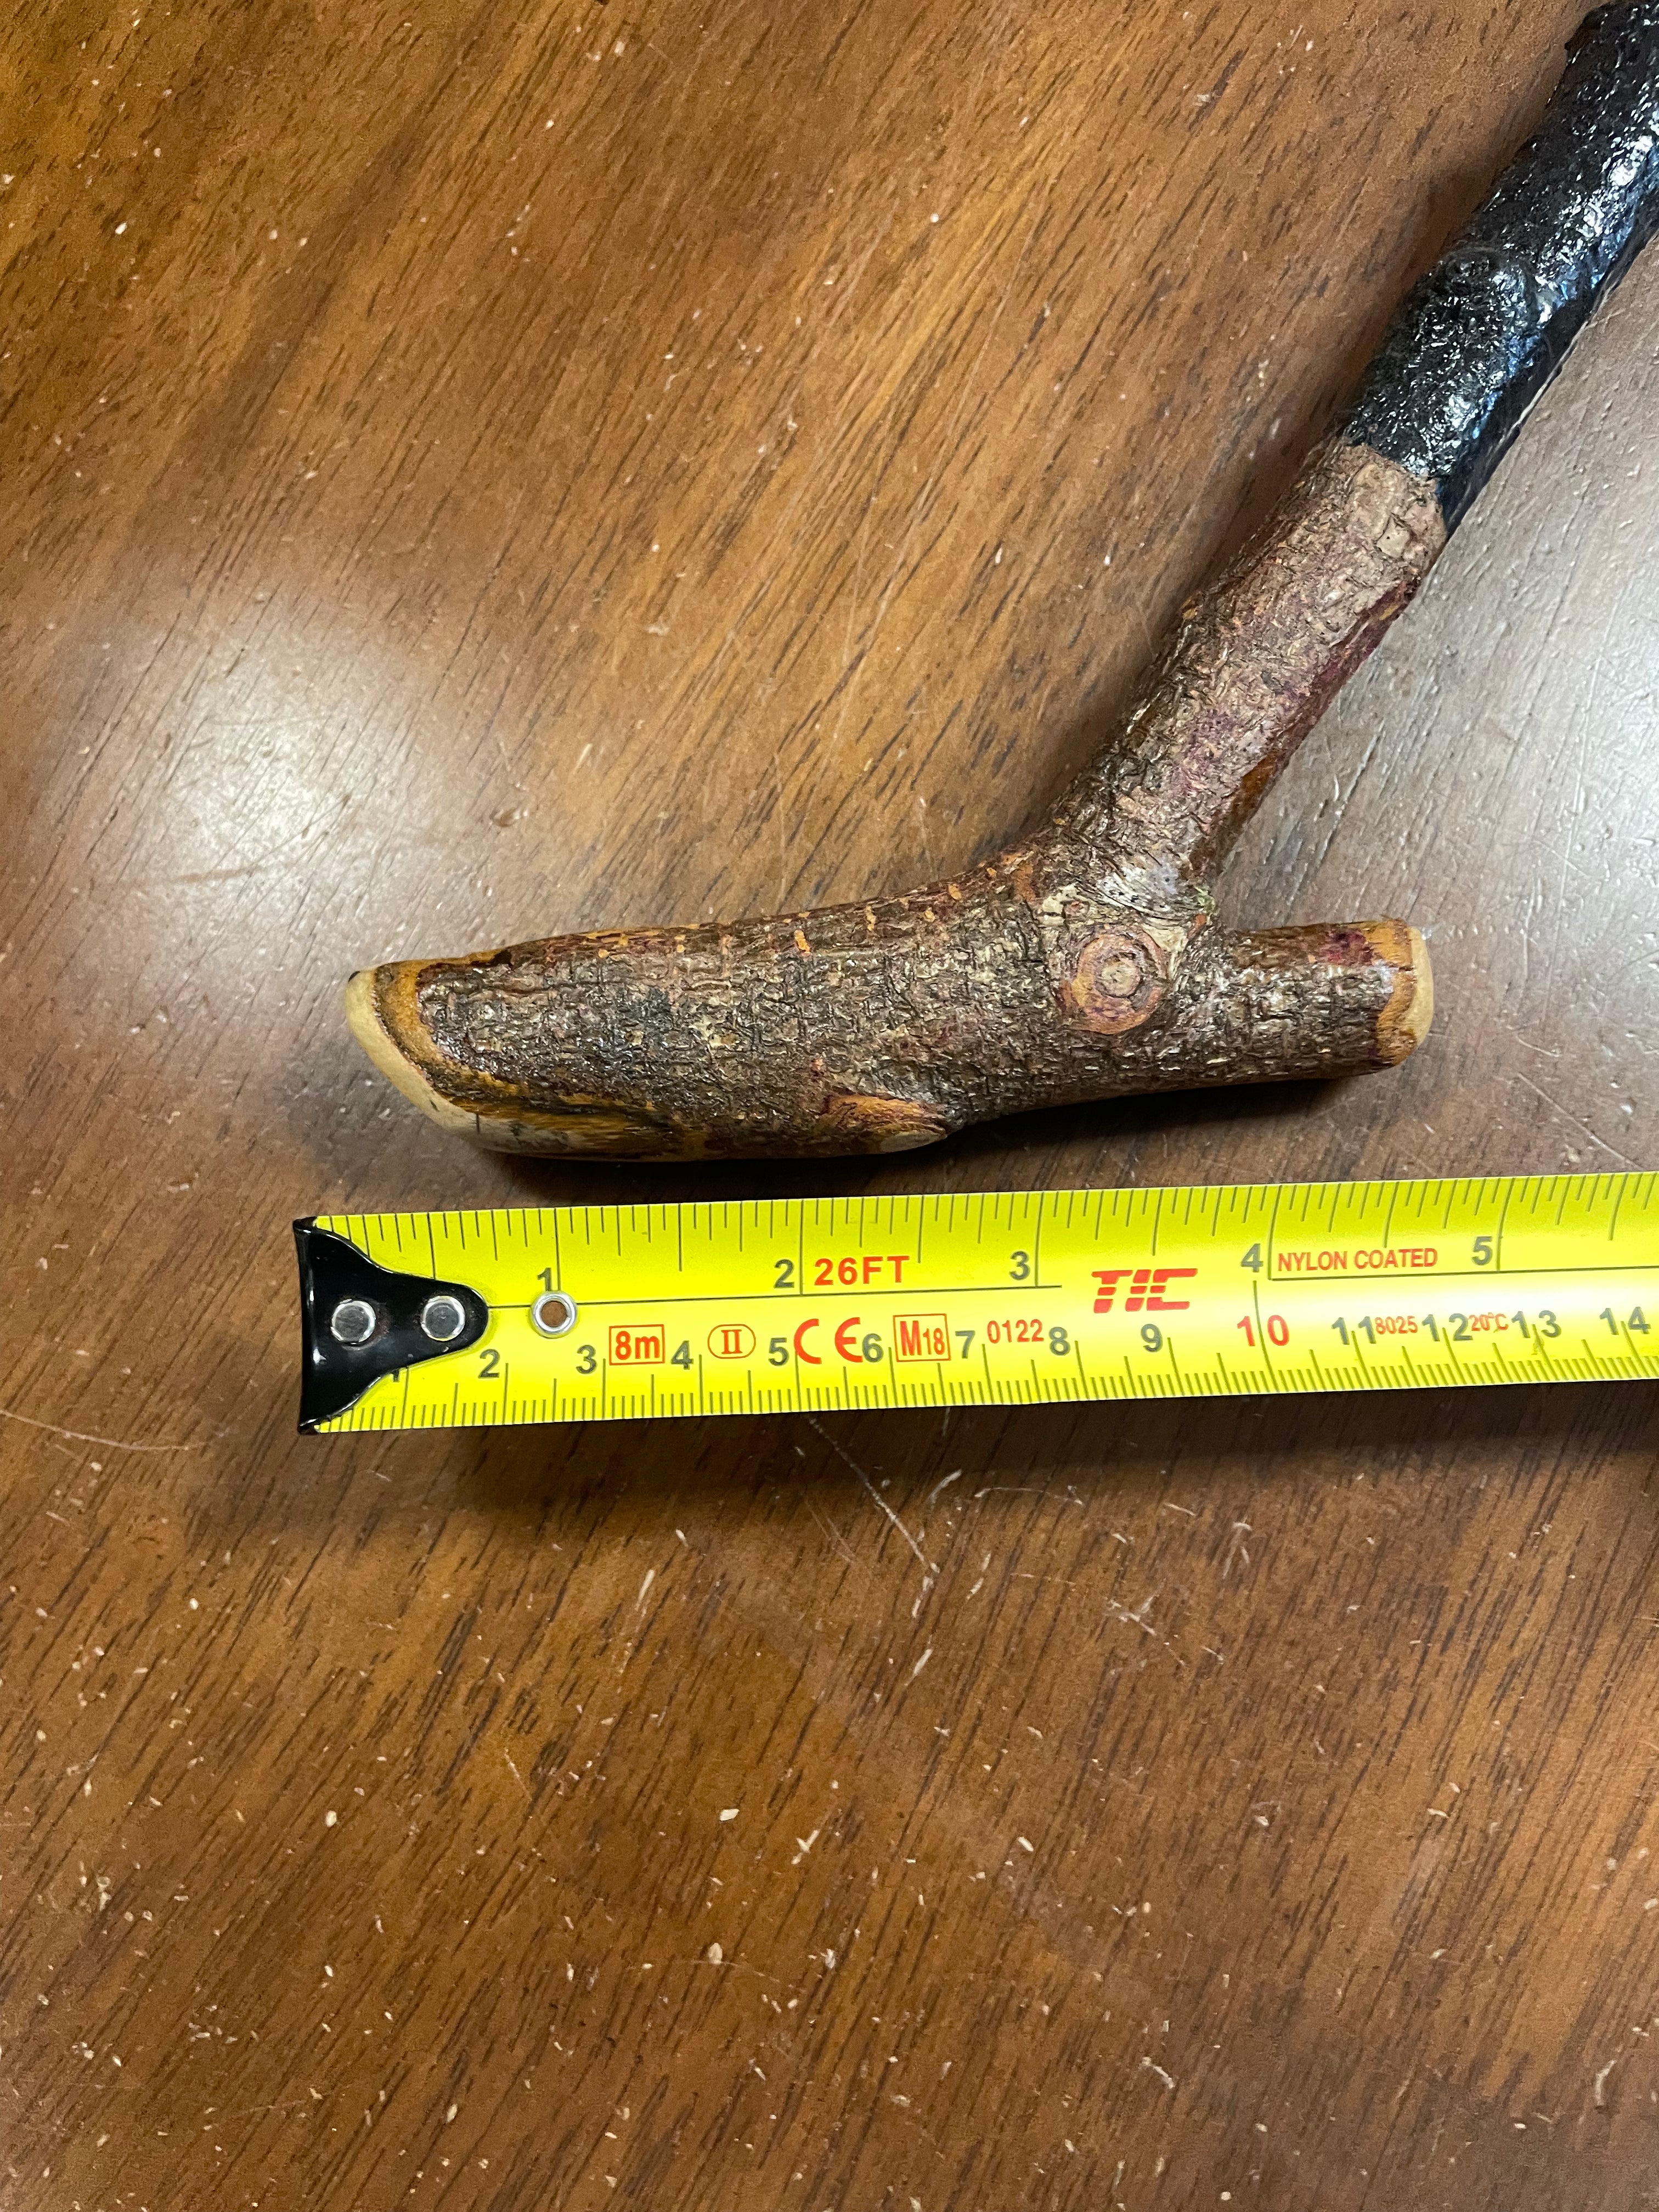 Blackthorn Walking Stick 32 1/2 inch- Handmade in Ireland